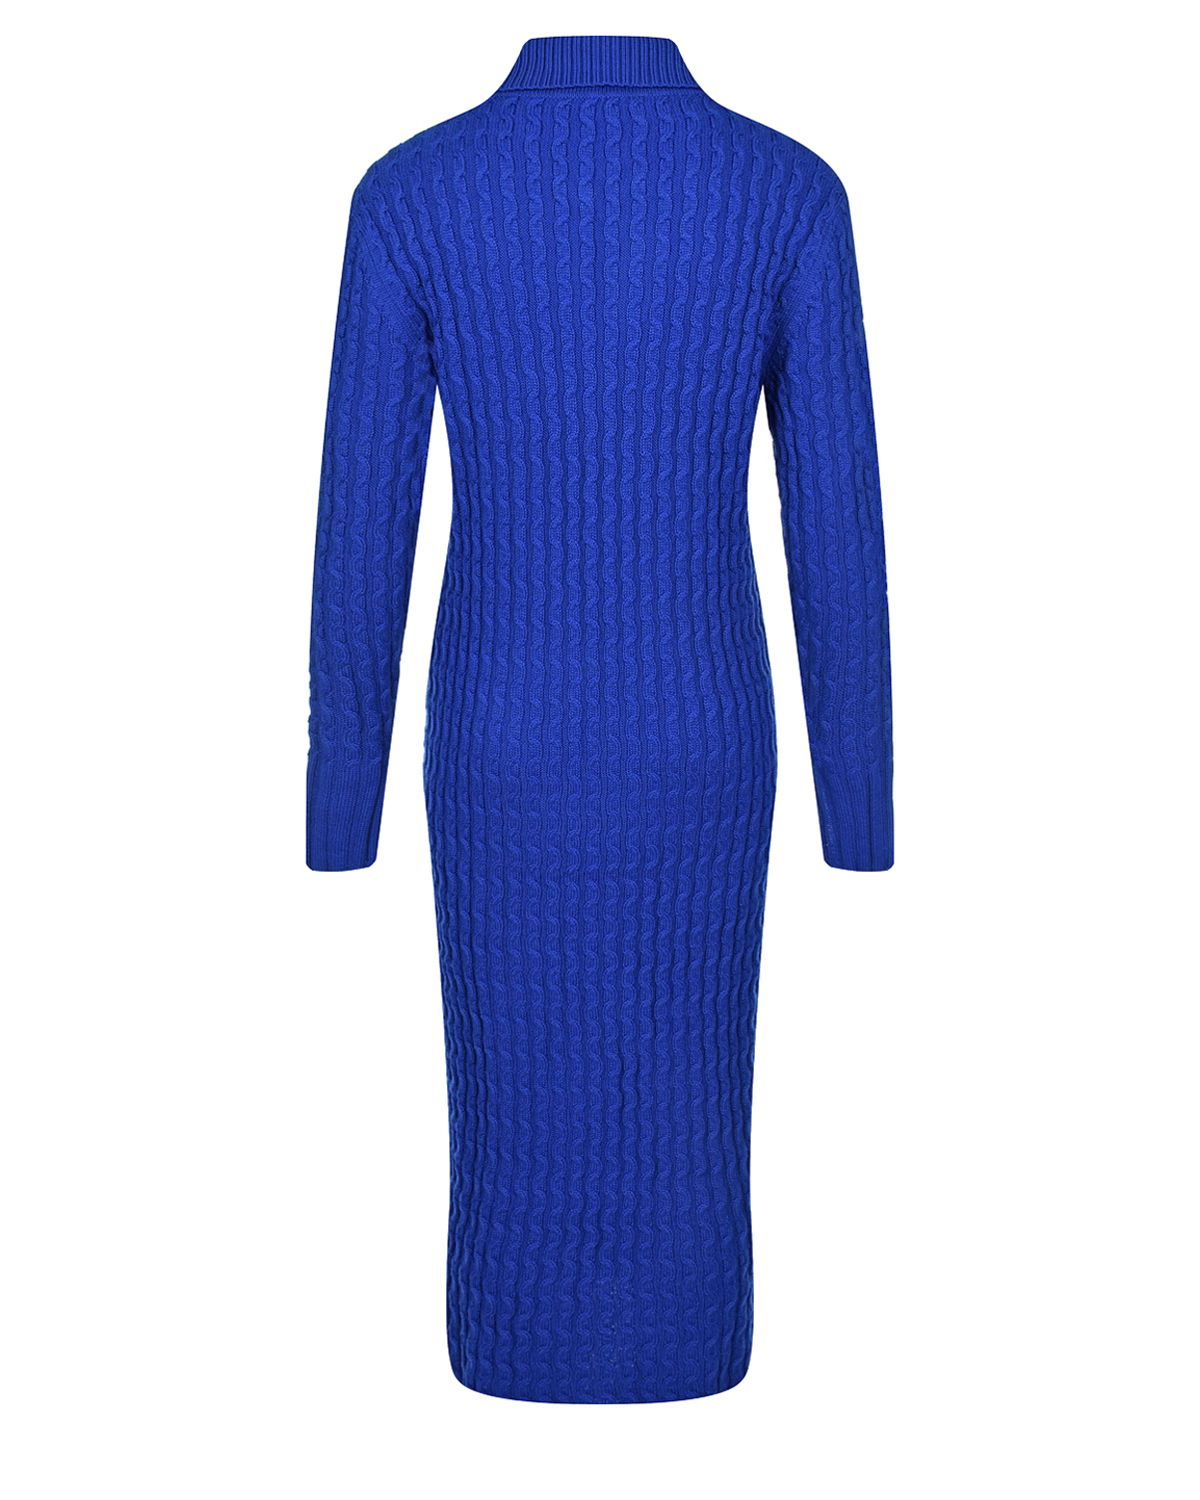 Ярко-синее платье из трикотажа Vivetta, размер 42, цвет нет цвета - фото 6